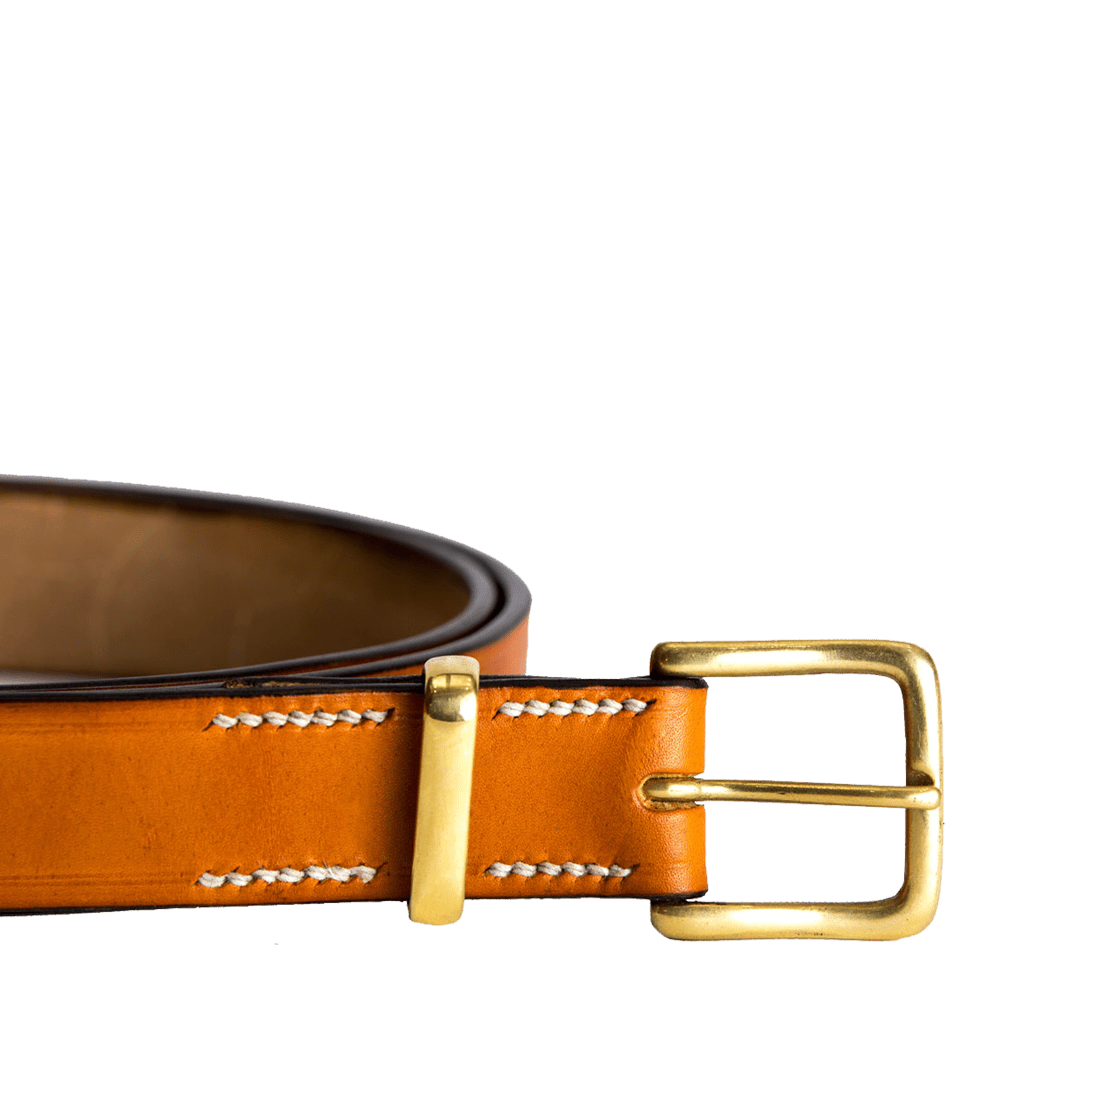 Leather British Oak belt in British oak bark bridle hide London tan colour, handmade and handstitched by Mackenzie Leather Edinburgh.